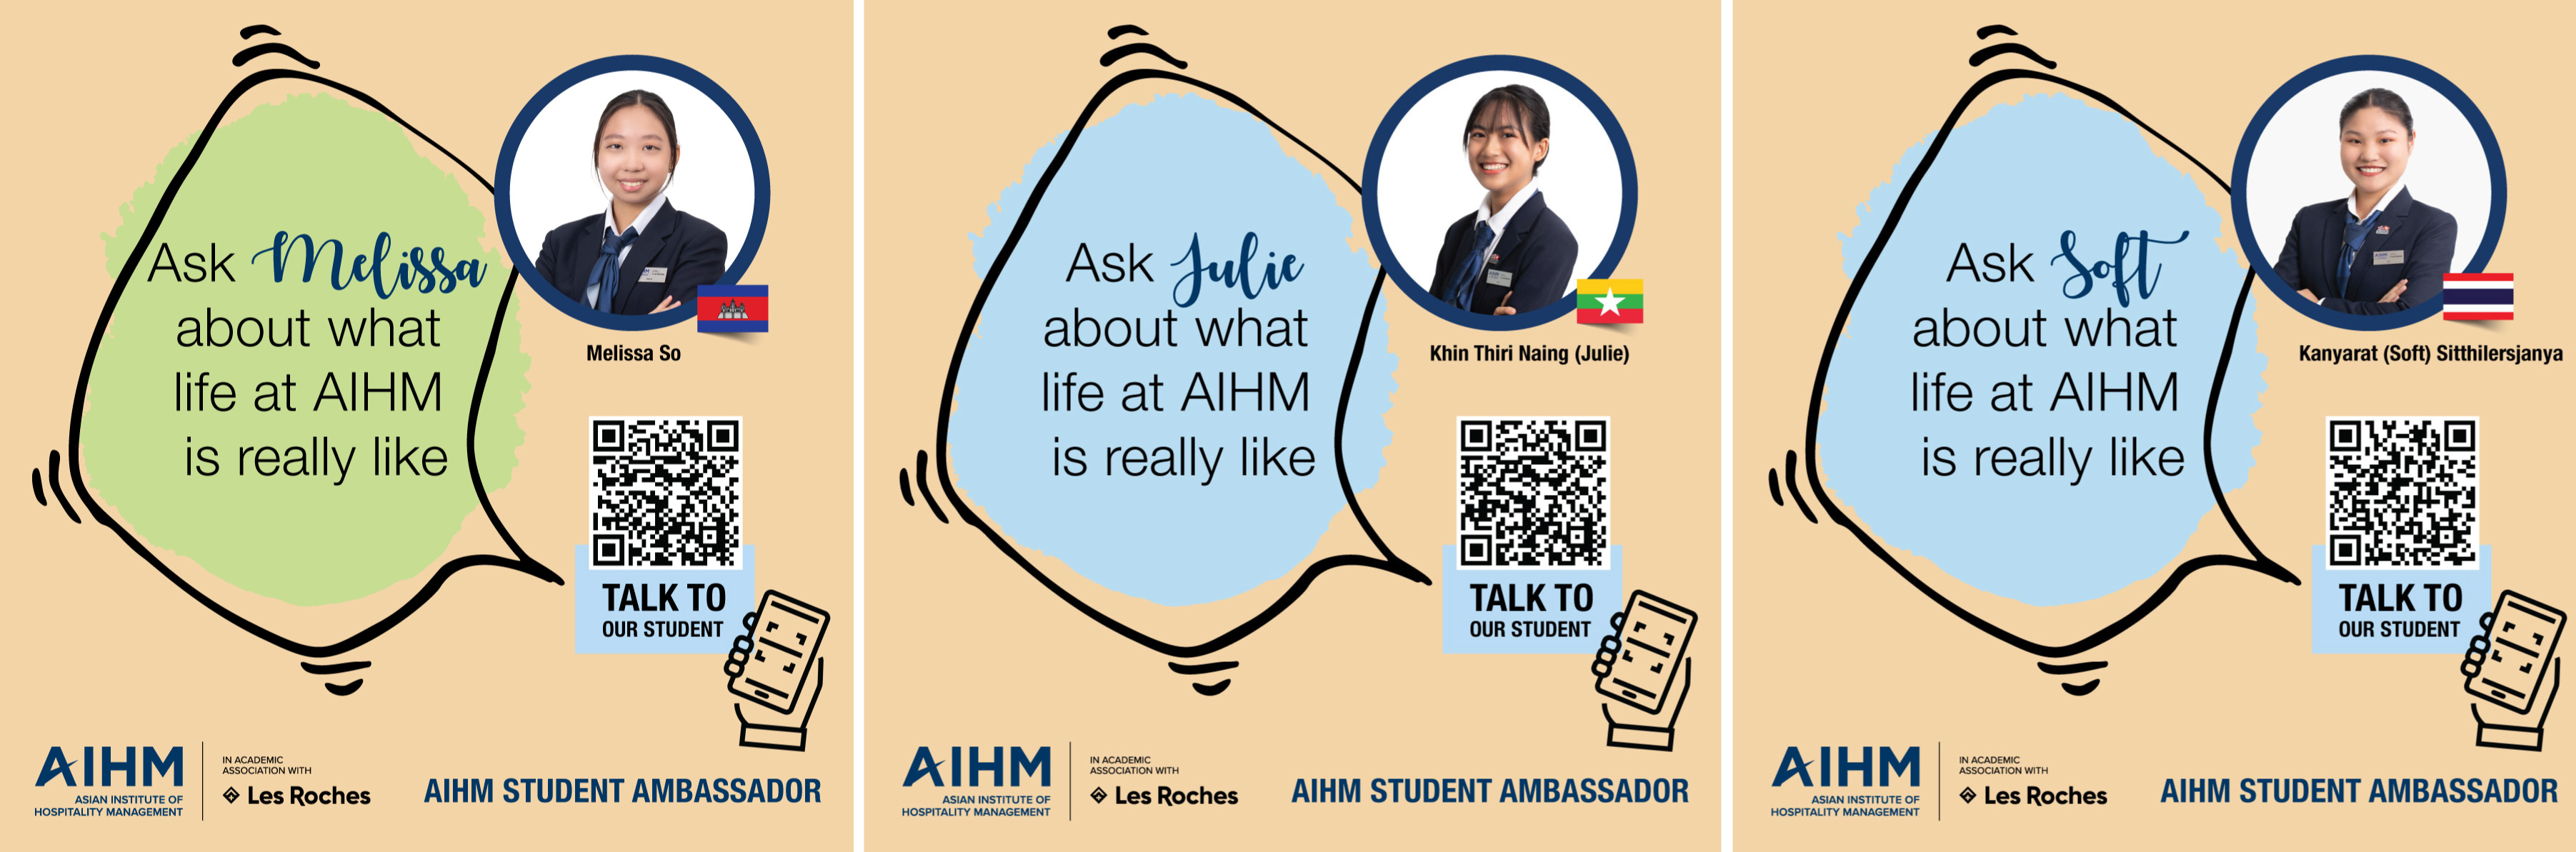 AIHM_StudentAmbassadors_ๅ-1